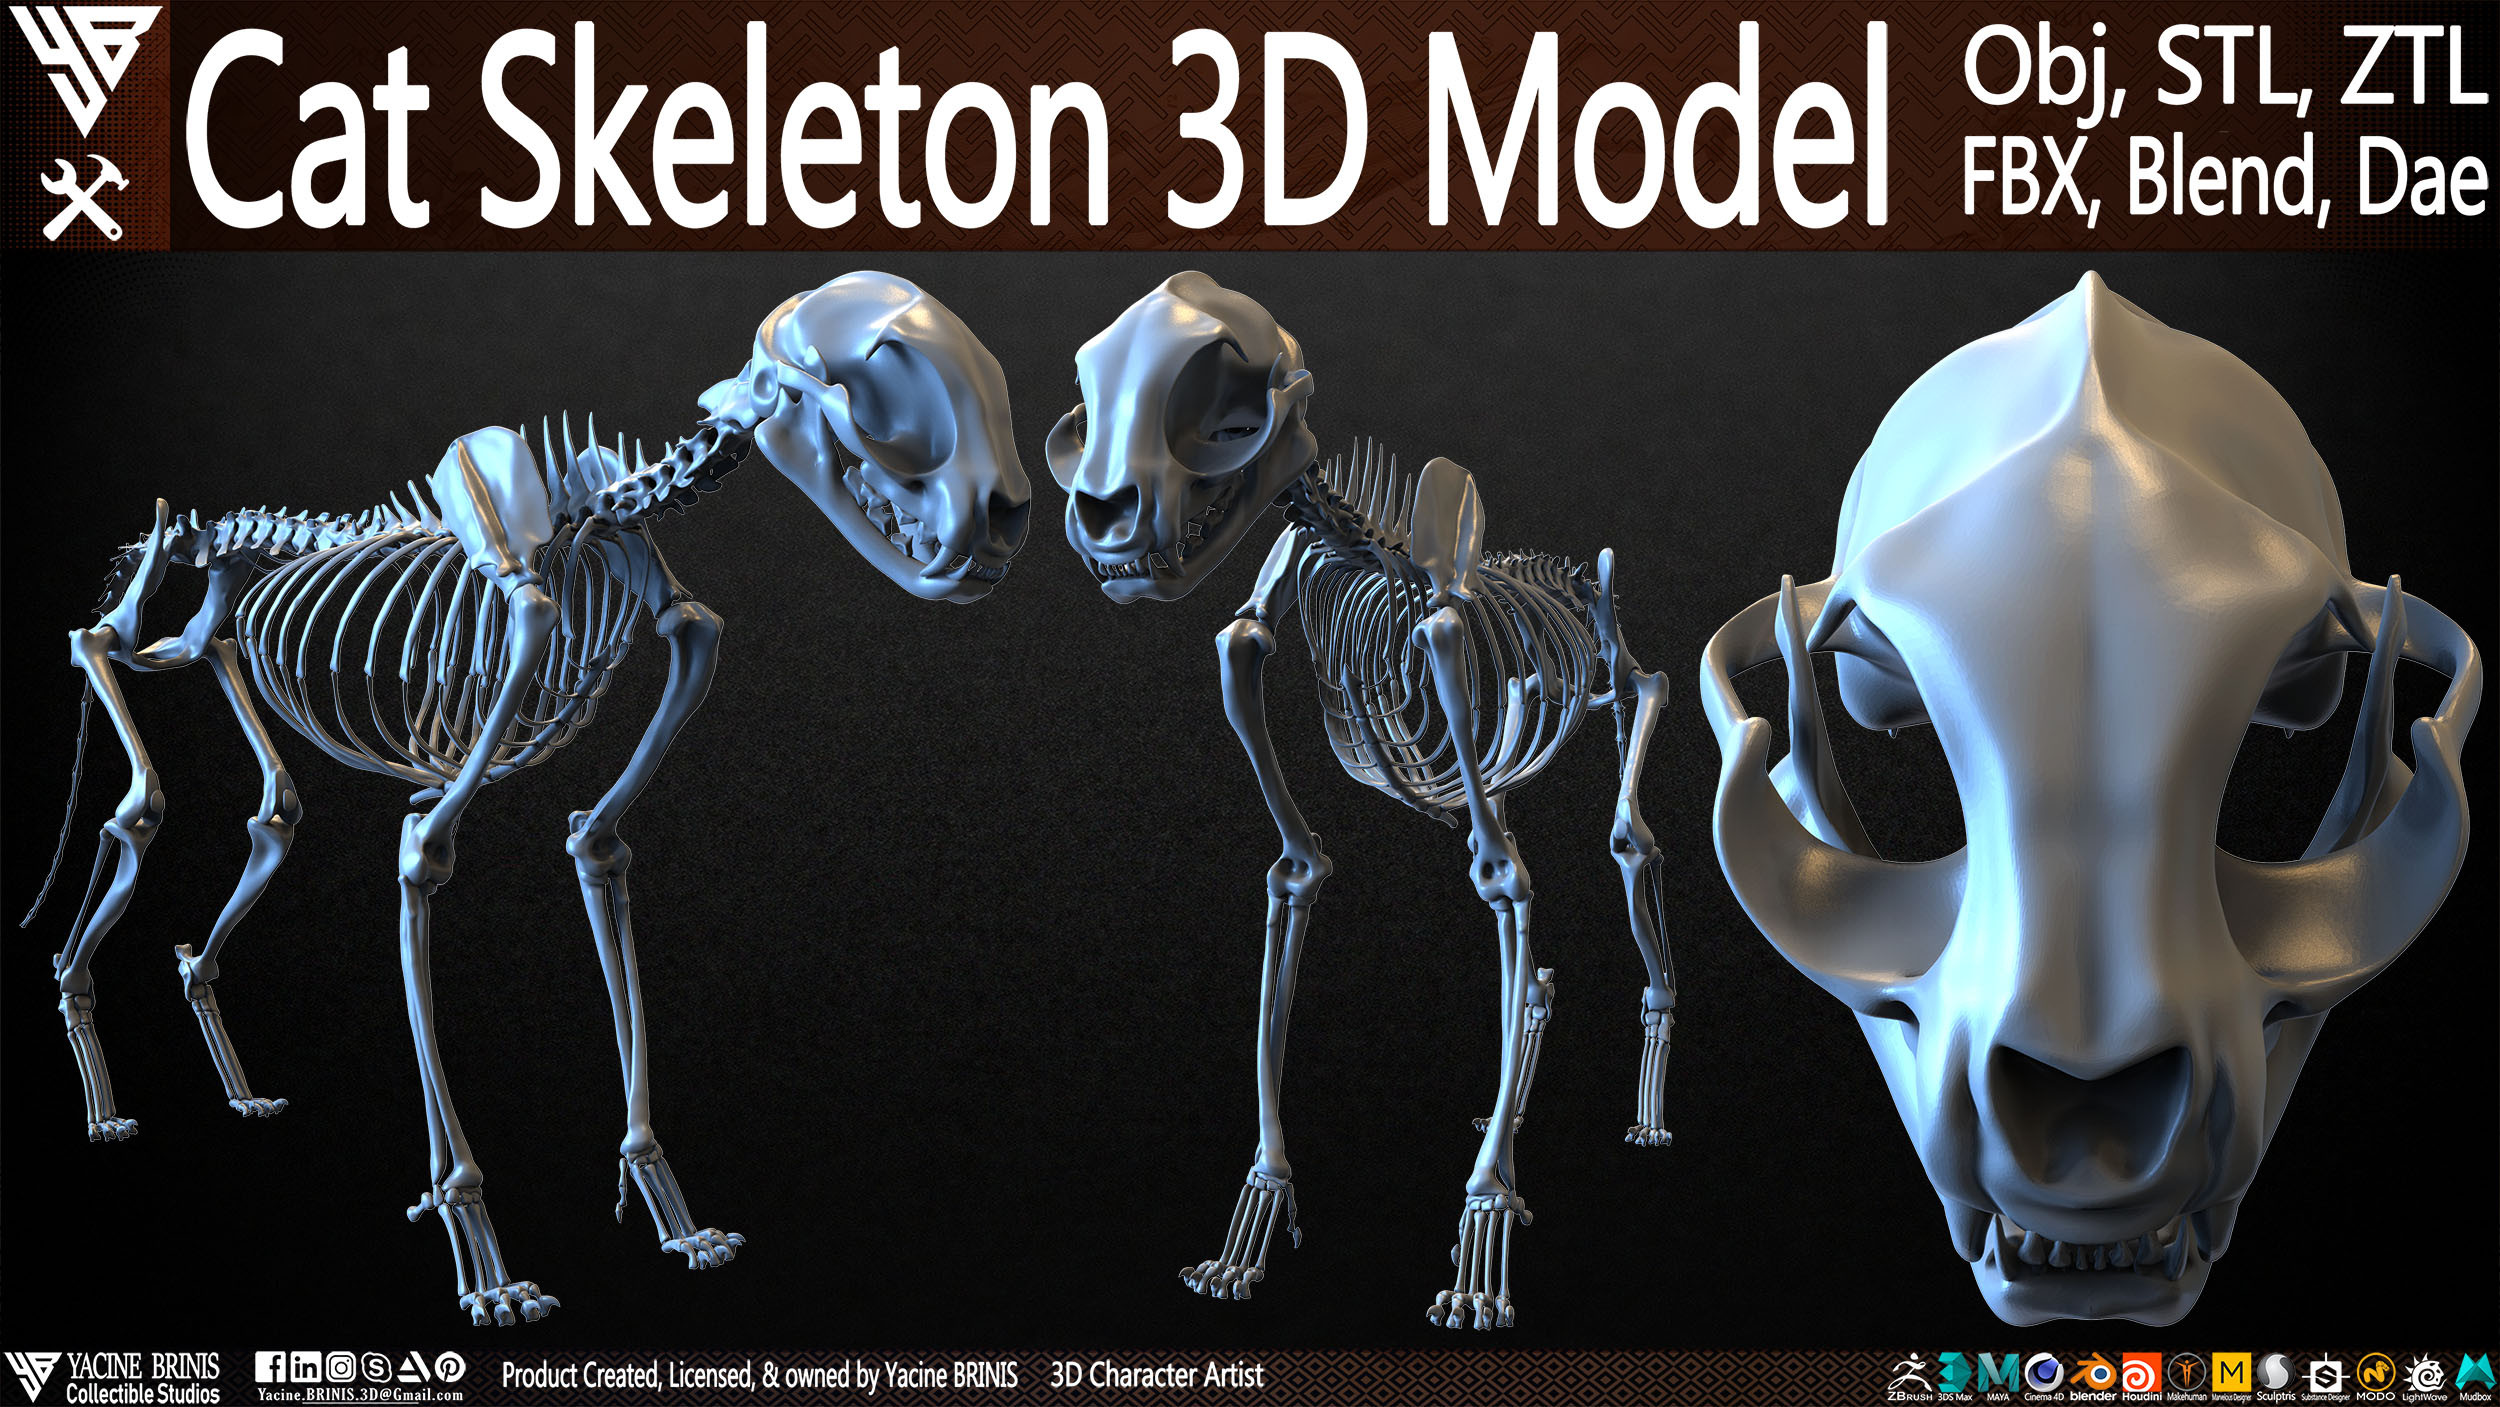 Highly Detailed Cat Skeleton 3D Model Sculpted by Yacine BRINIS Set 001